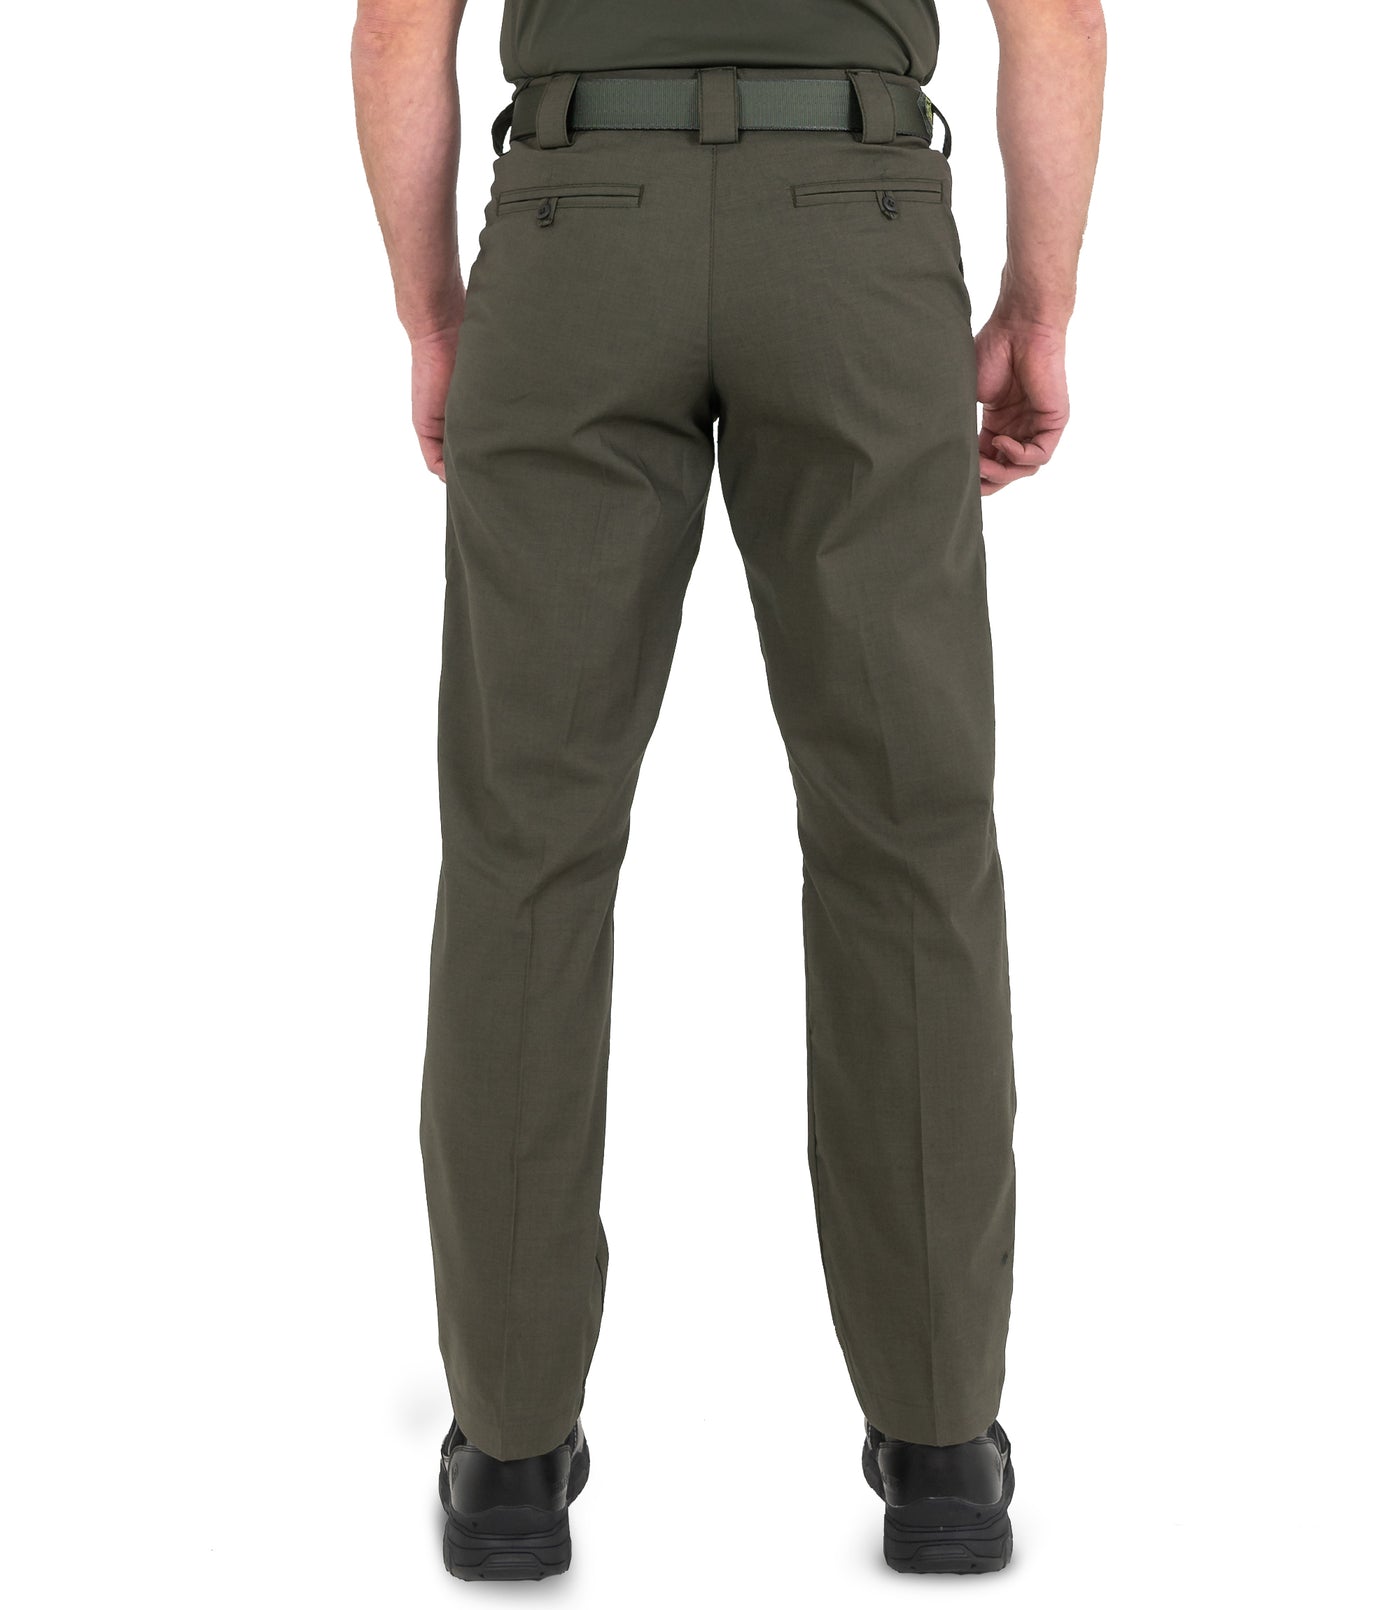 Back of Men's V2 Pro Duty Uniform Pant in OD Green